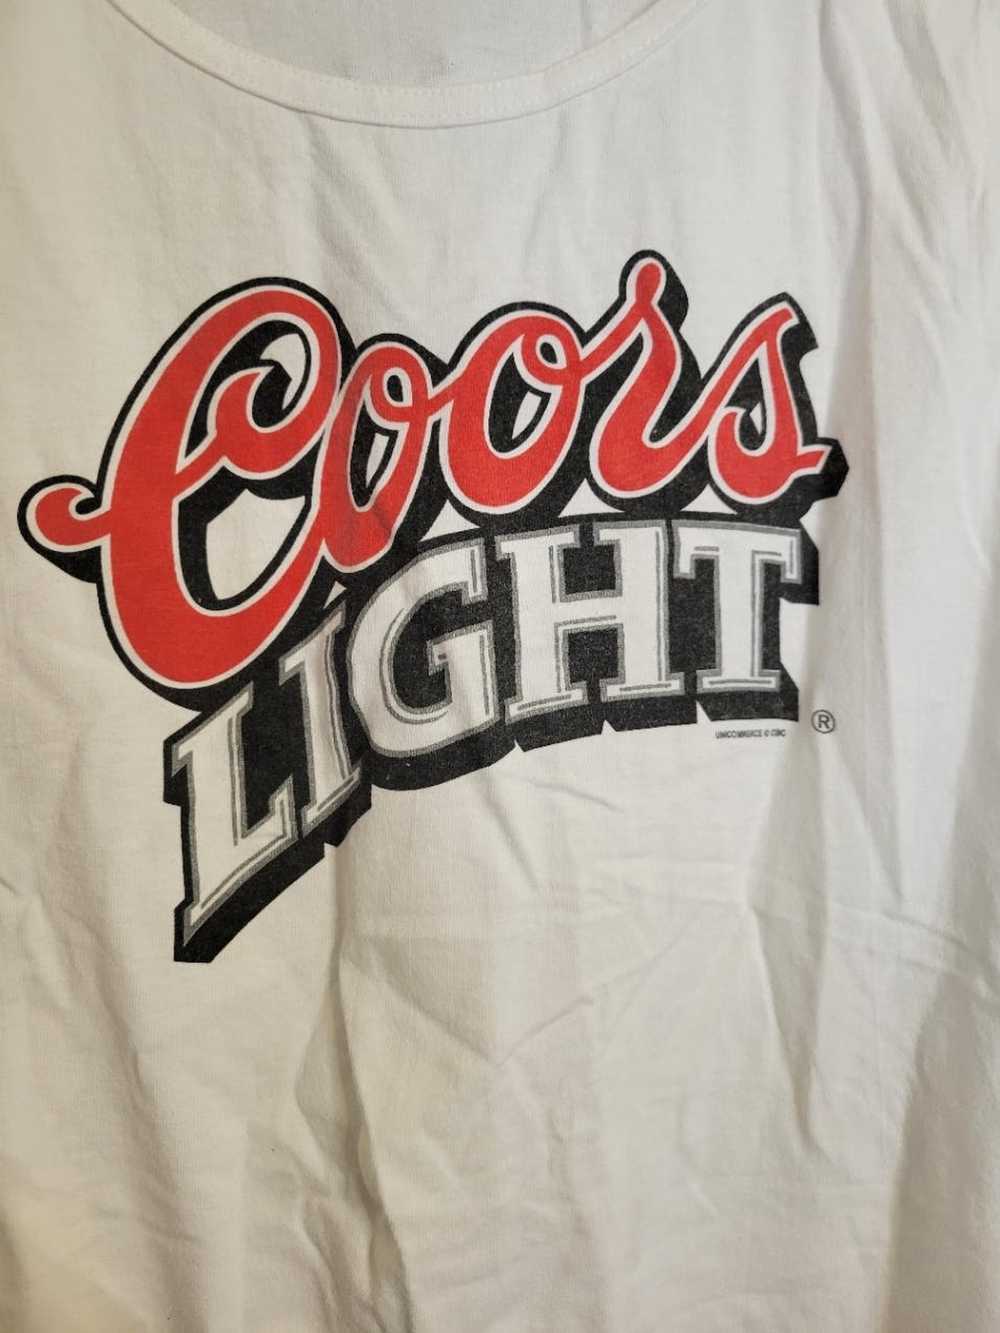 Hanes Vintage Coors Light Sleeveless Shirt - image 2